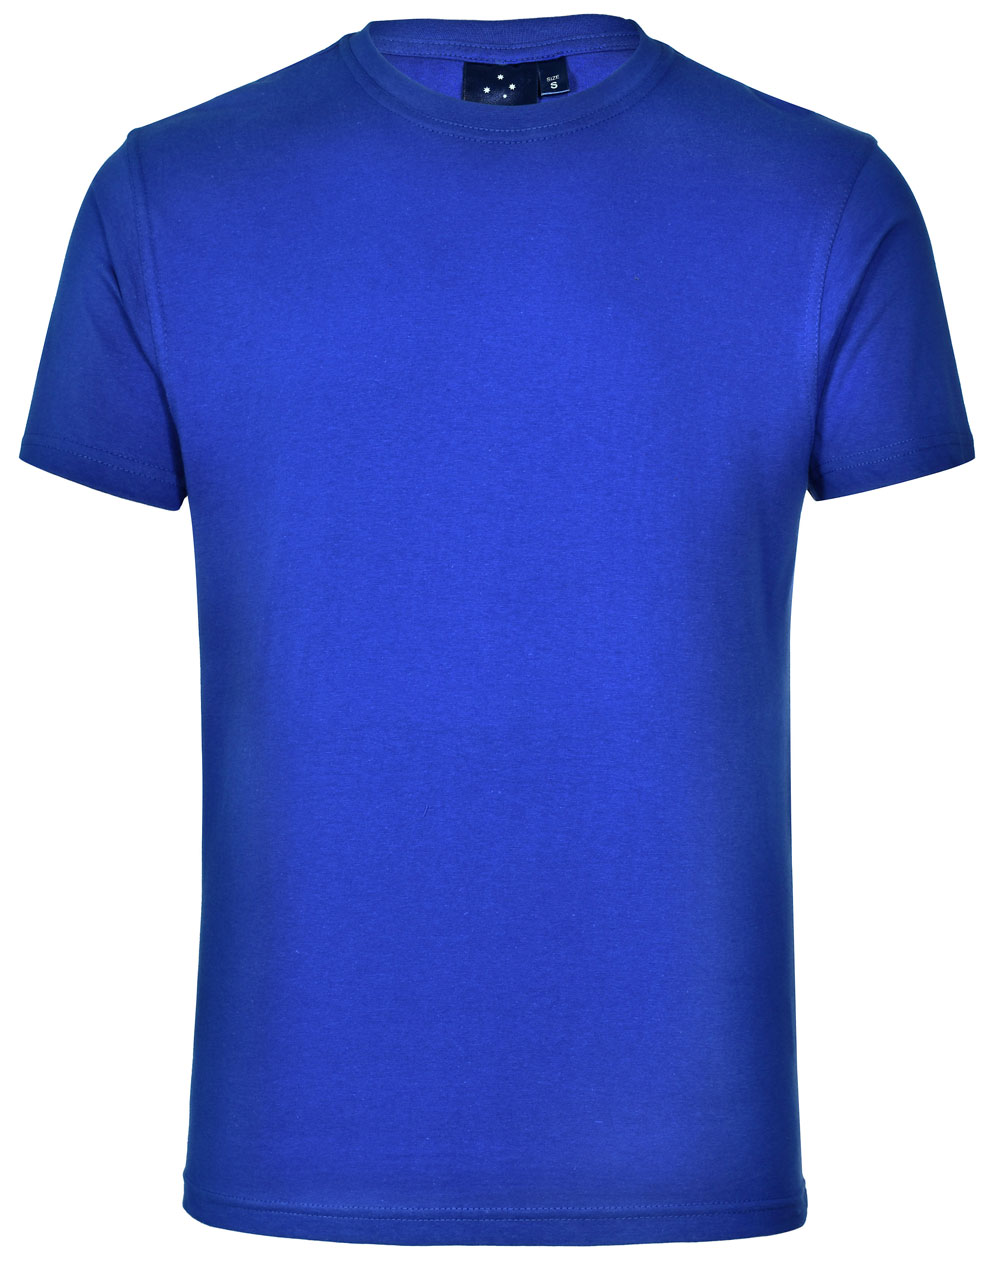 Custom Made (Royal) Budget Unisex Crew Neck T-Shirts Mens Online Perth Australia